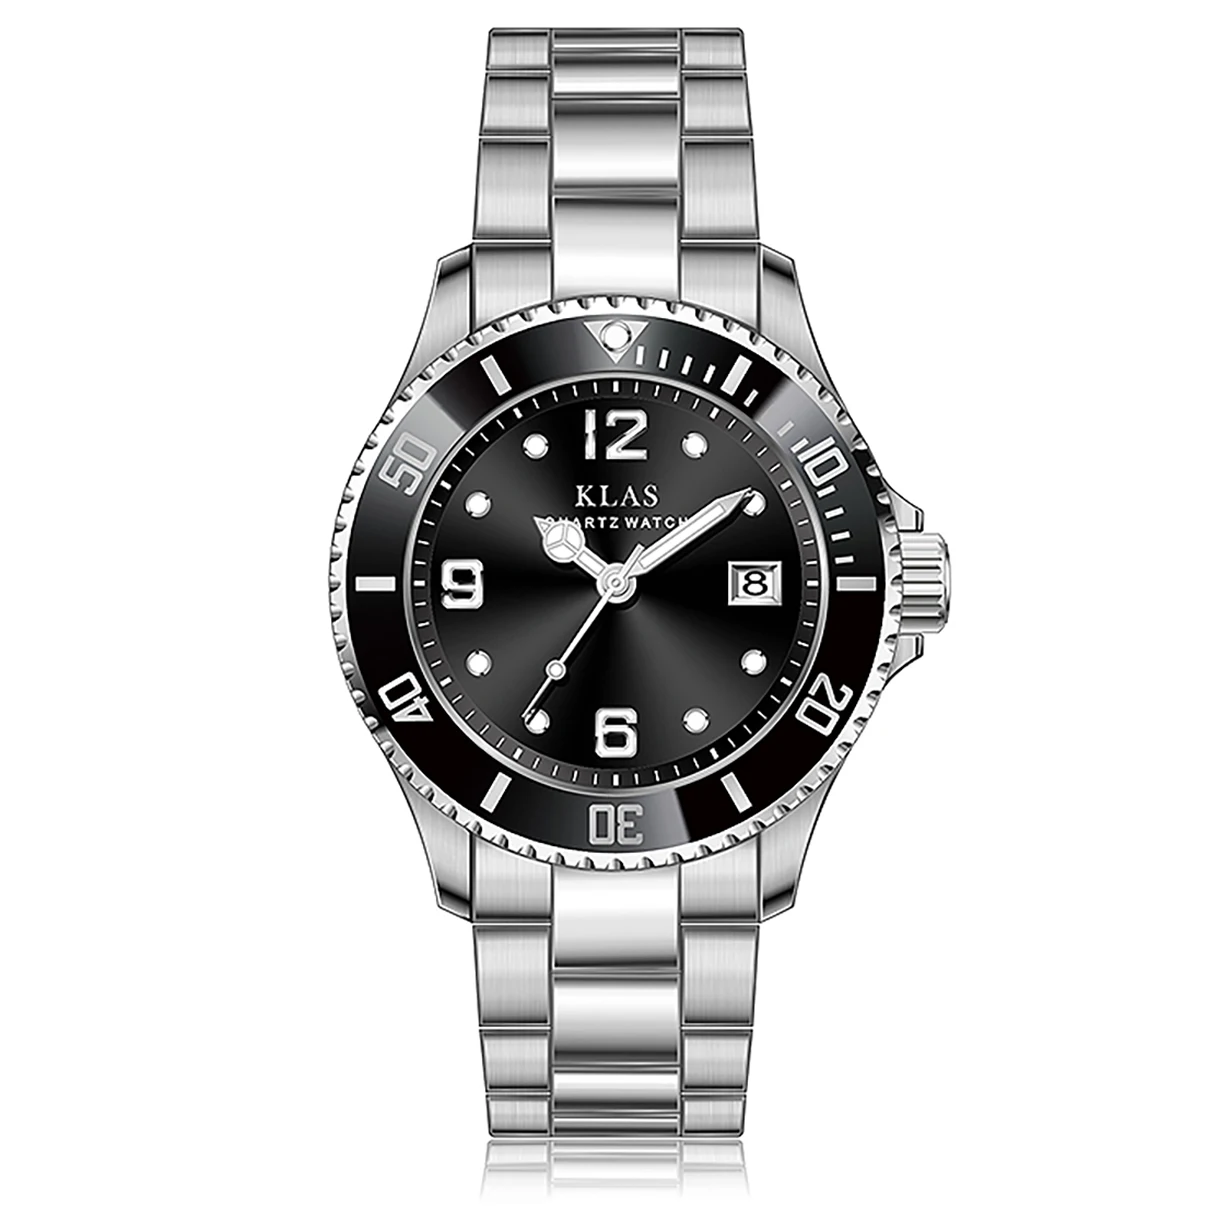 Anti-reflective flat glass coated quartz men's watch men's fashion watch men's watch Klas brand